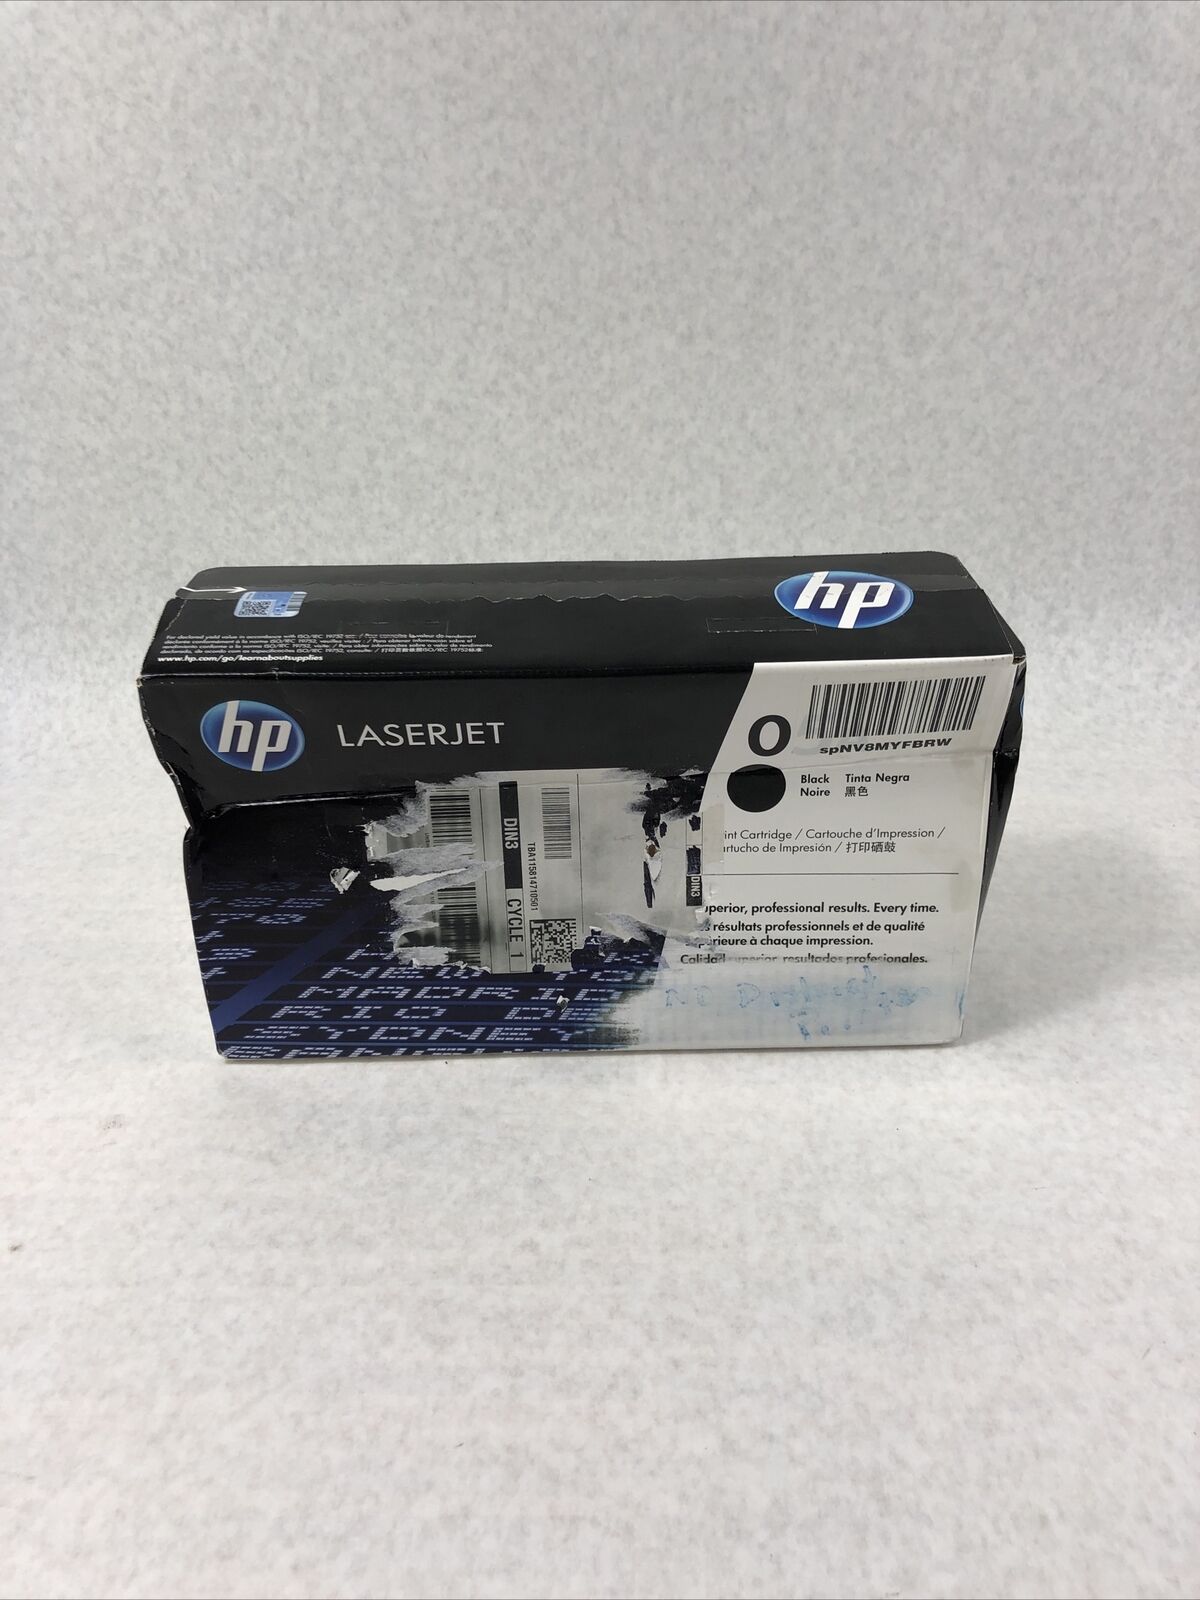 HP LaserJet CE505-00901 Black Print Cartridge for P2035/P2055